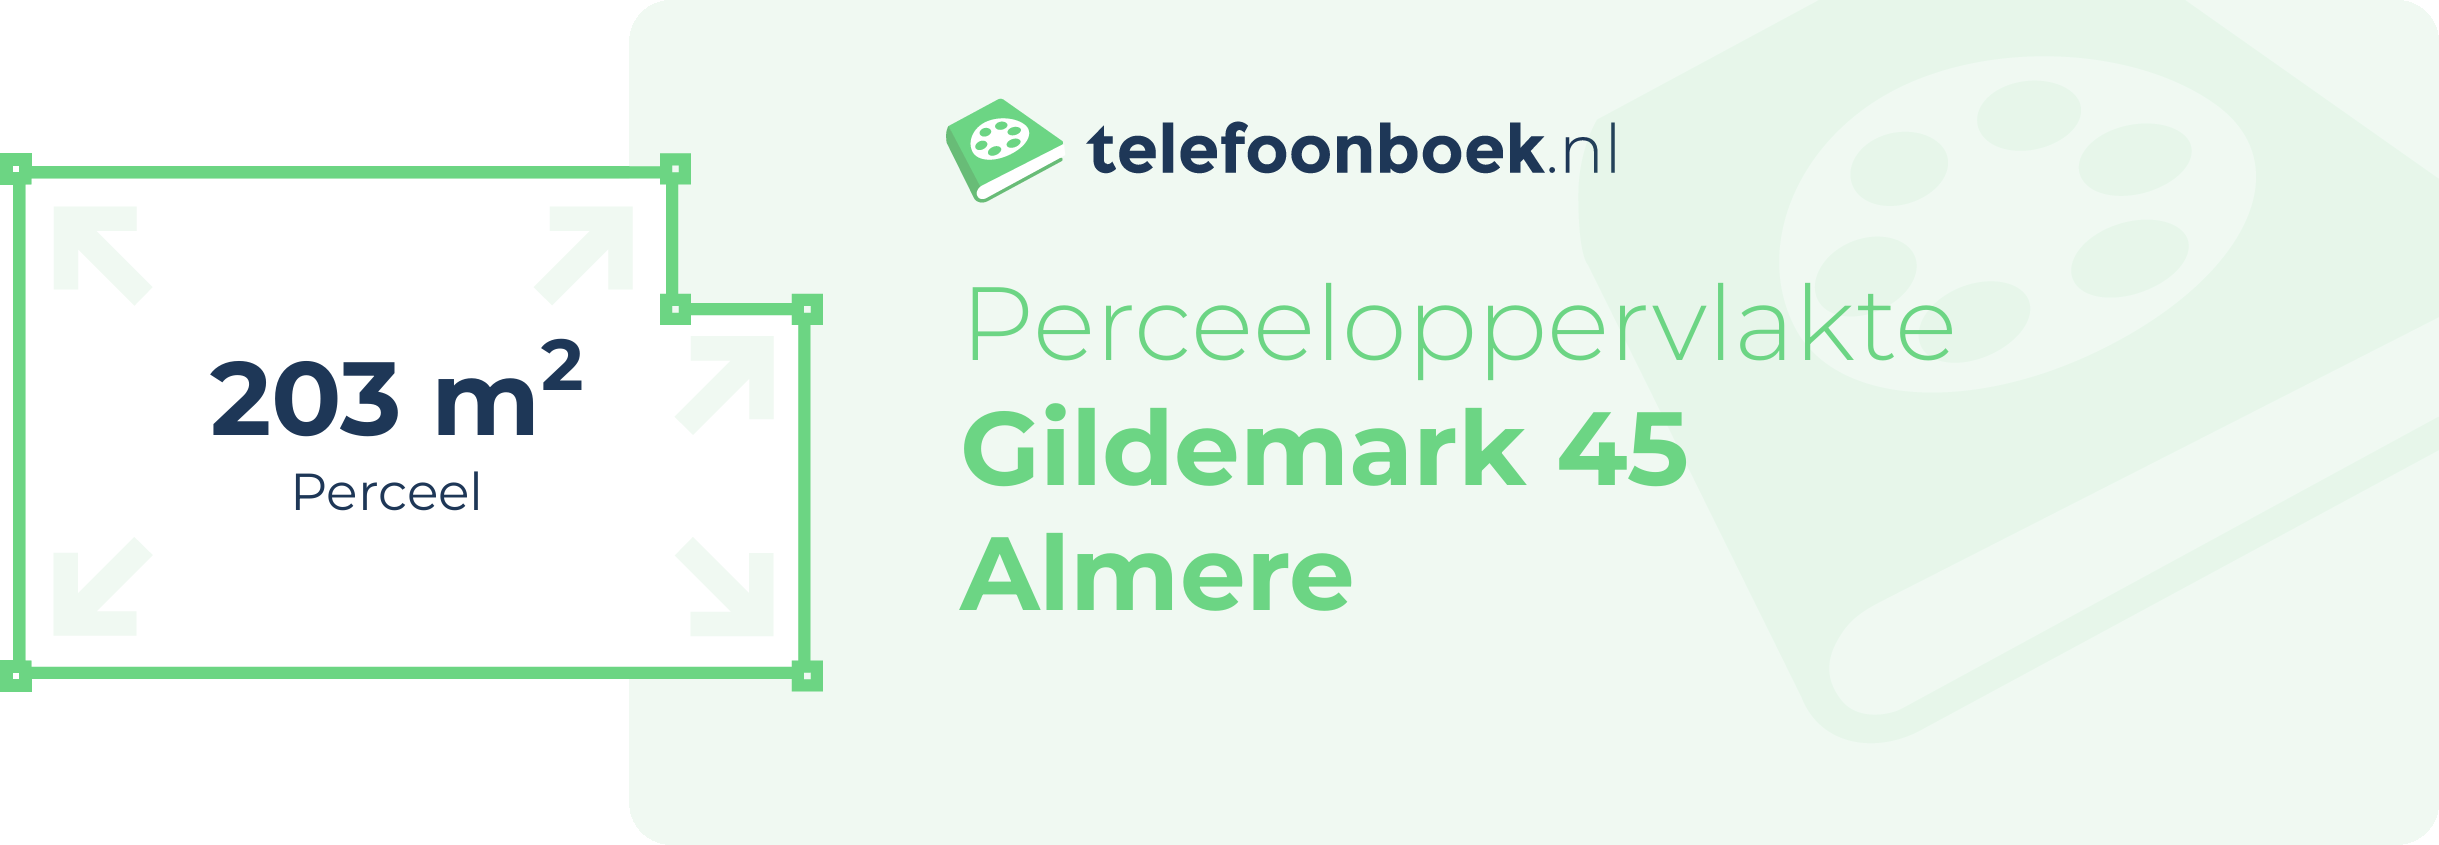 Perceeloppervlakte Gildemark 45 Almere